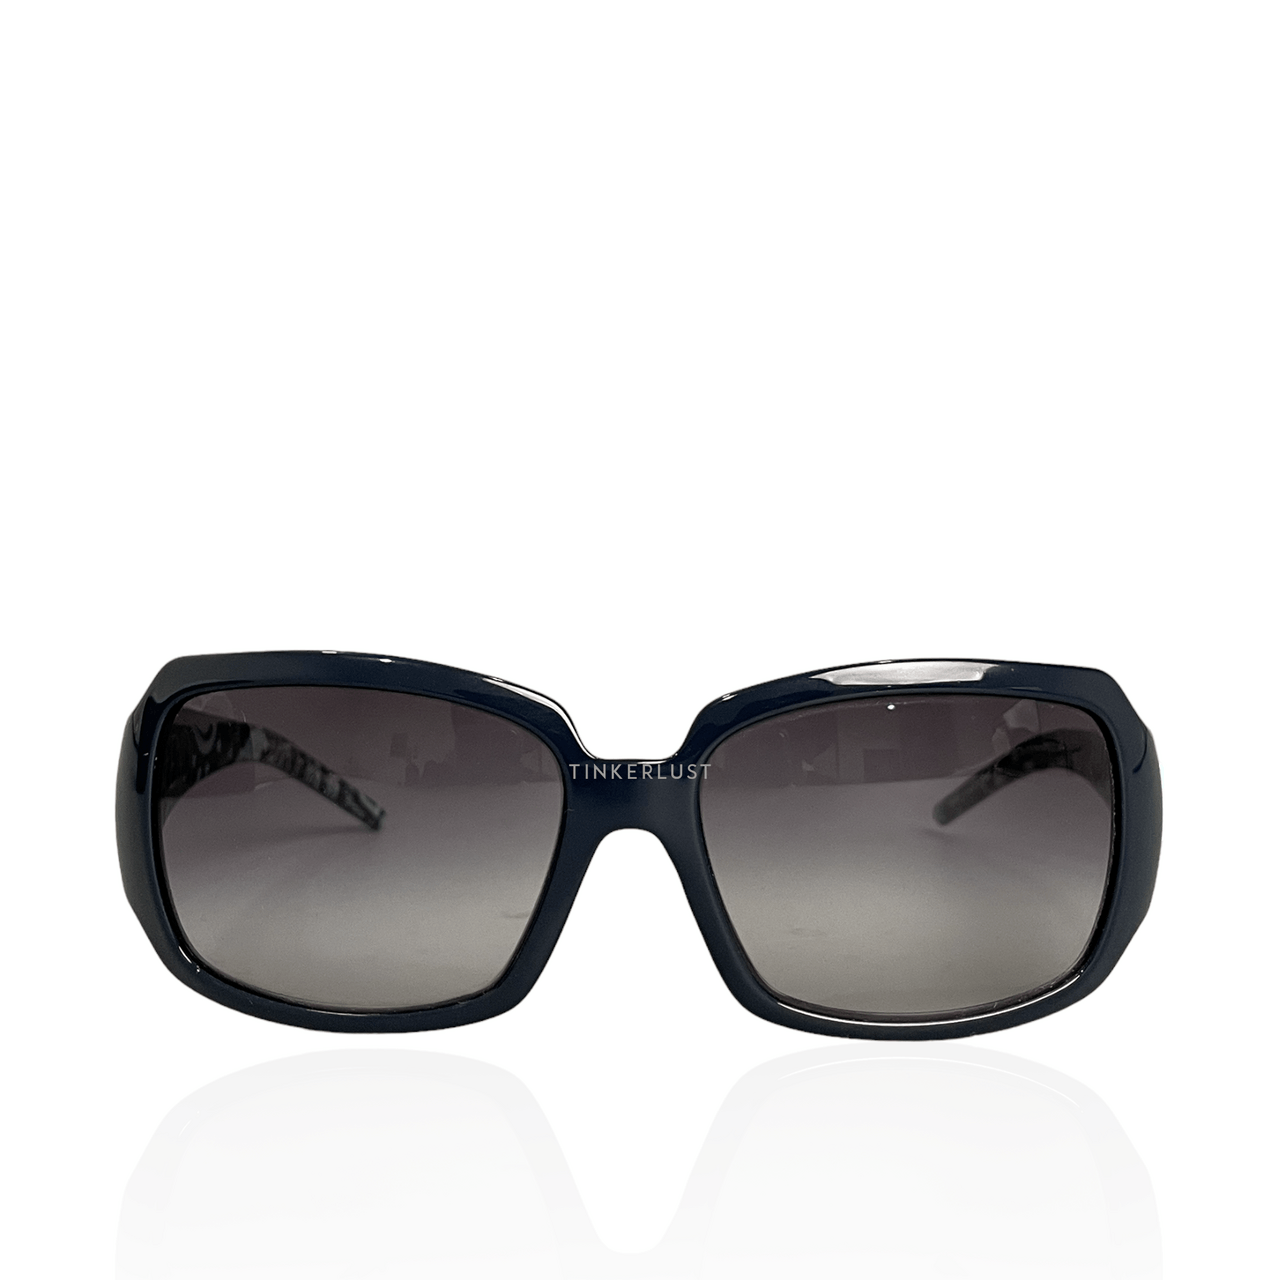 Fendi FS507 Blue Sunglasses